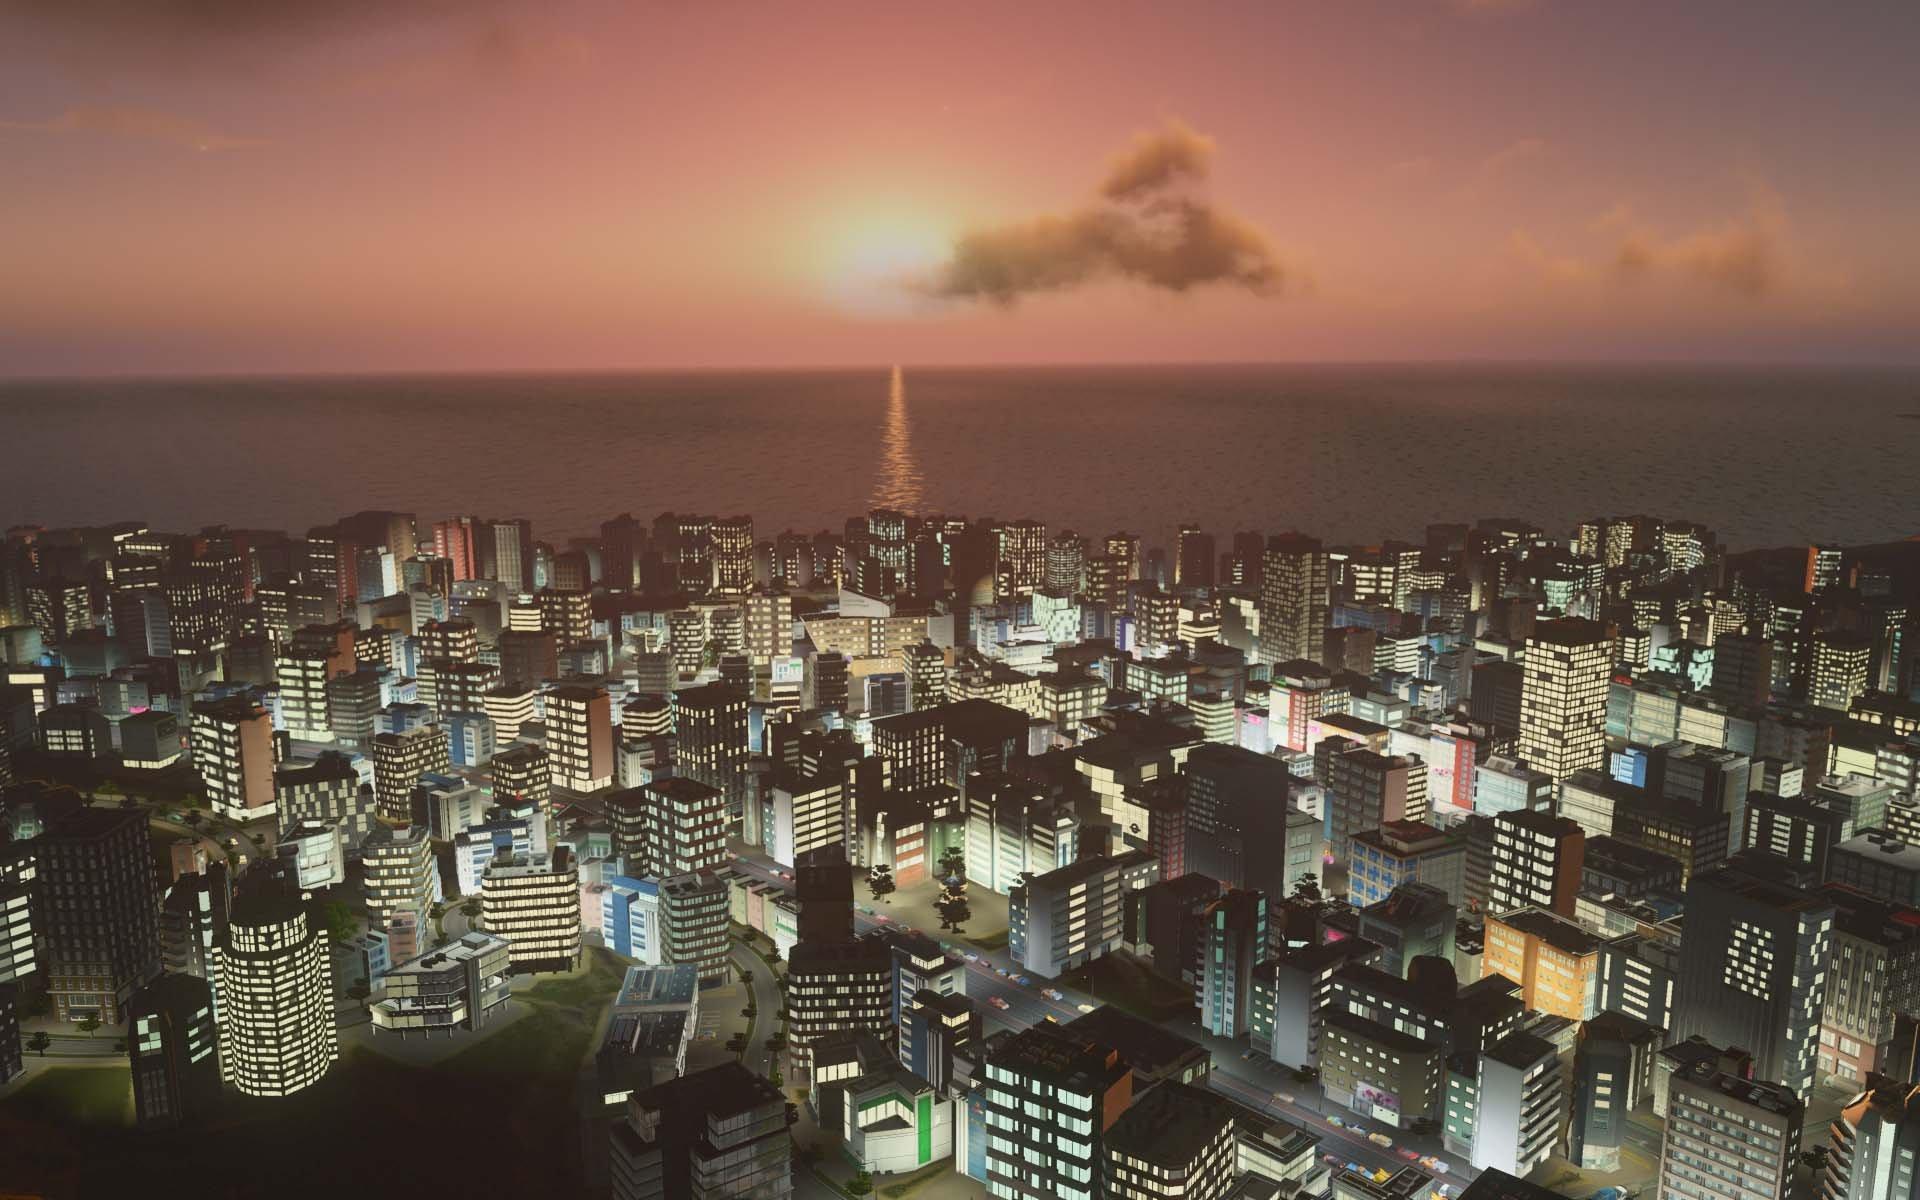 Cities: Skylines - Playstation®4 Edition